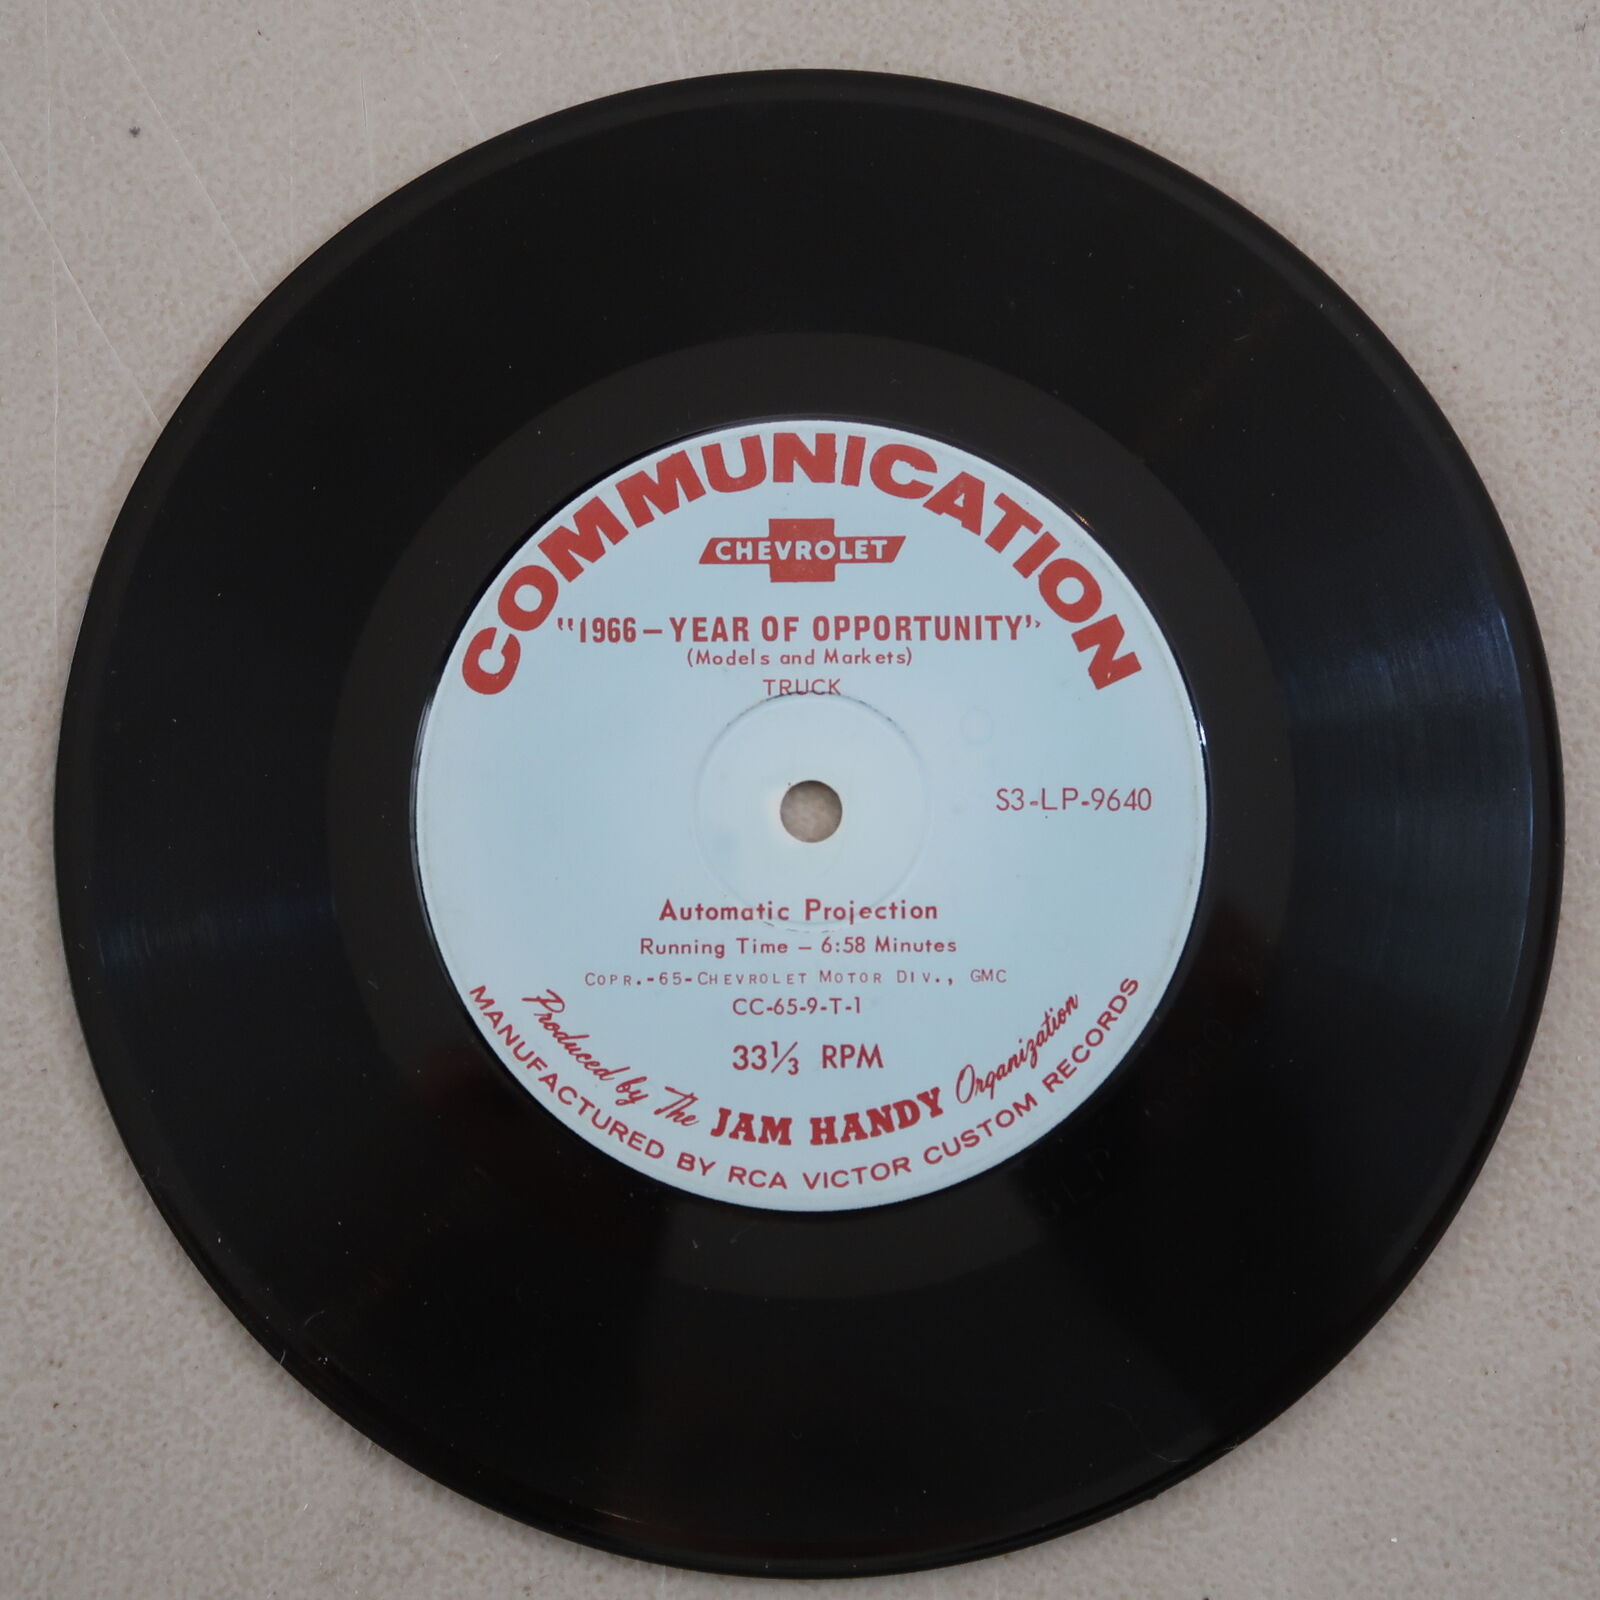 1966-Year Of Opportunity Chevrolet Communication Vinyl Record Jim Handy 1-203